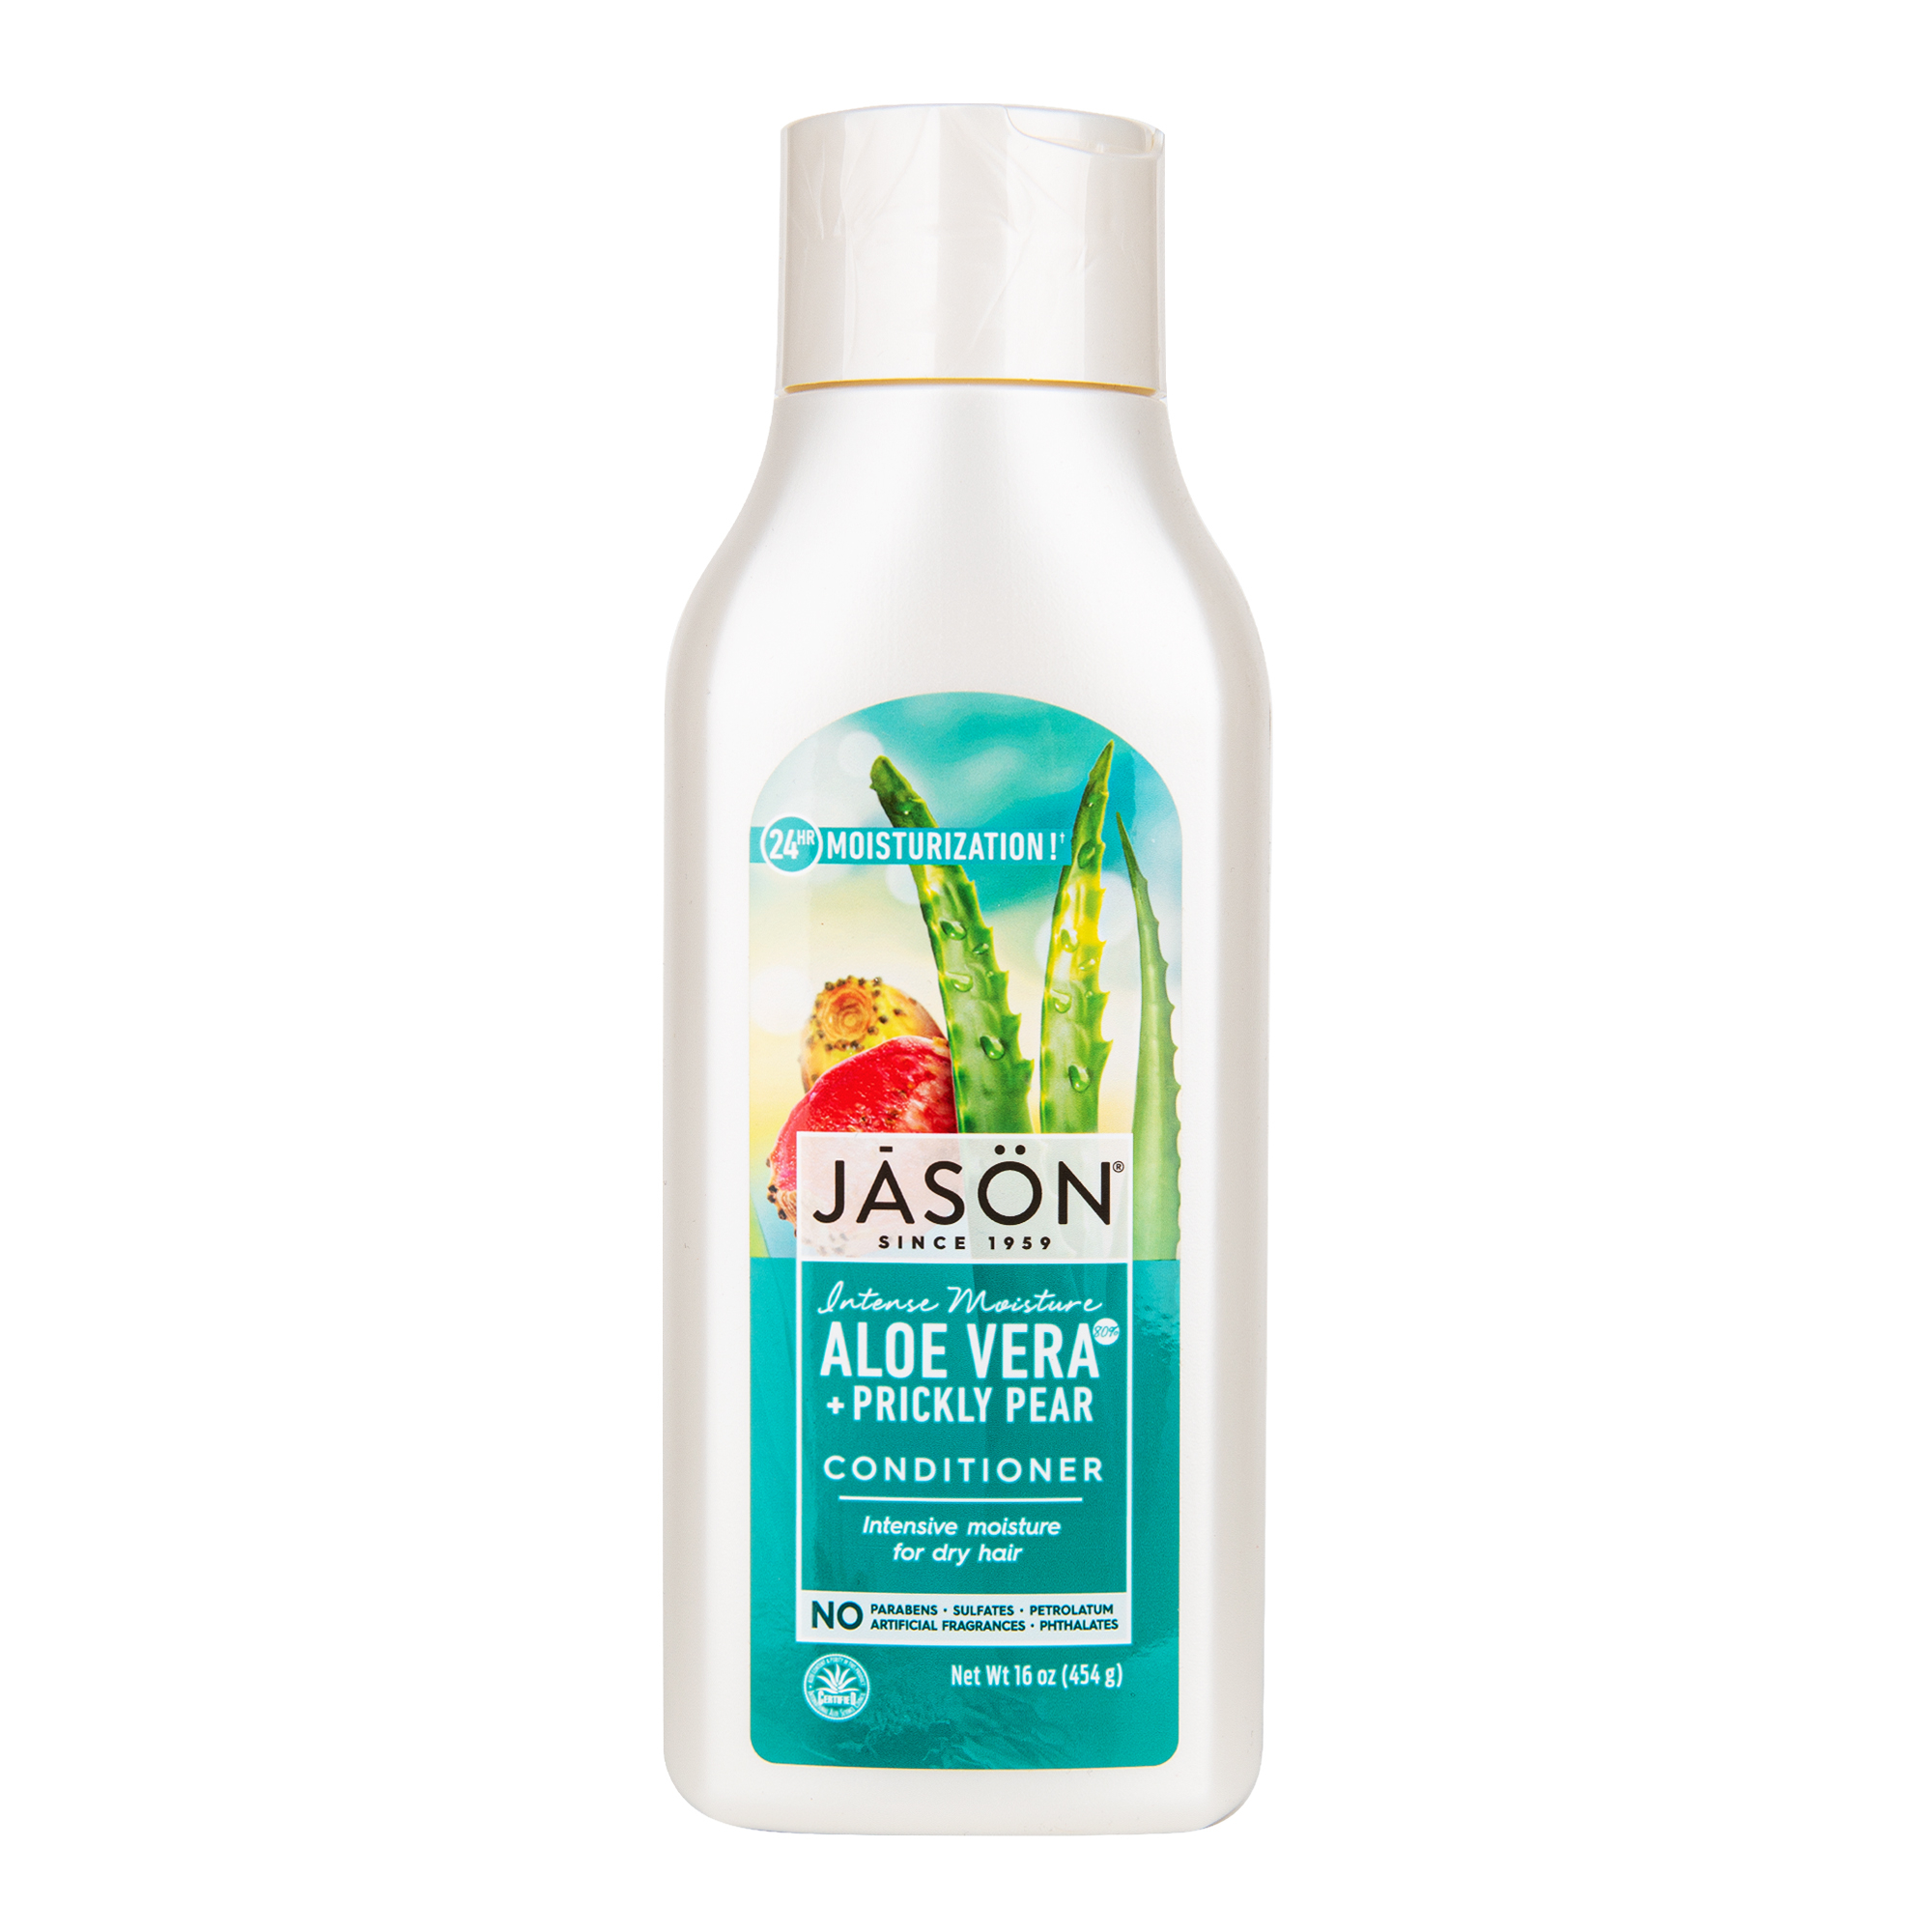 JASON Balsam de păr Aloe Vera 454 g